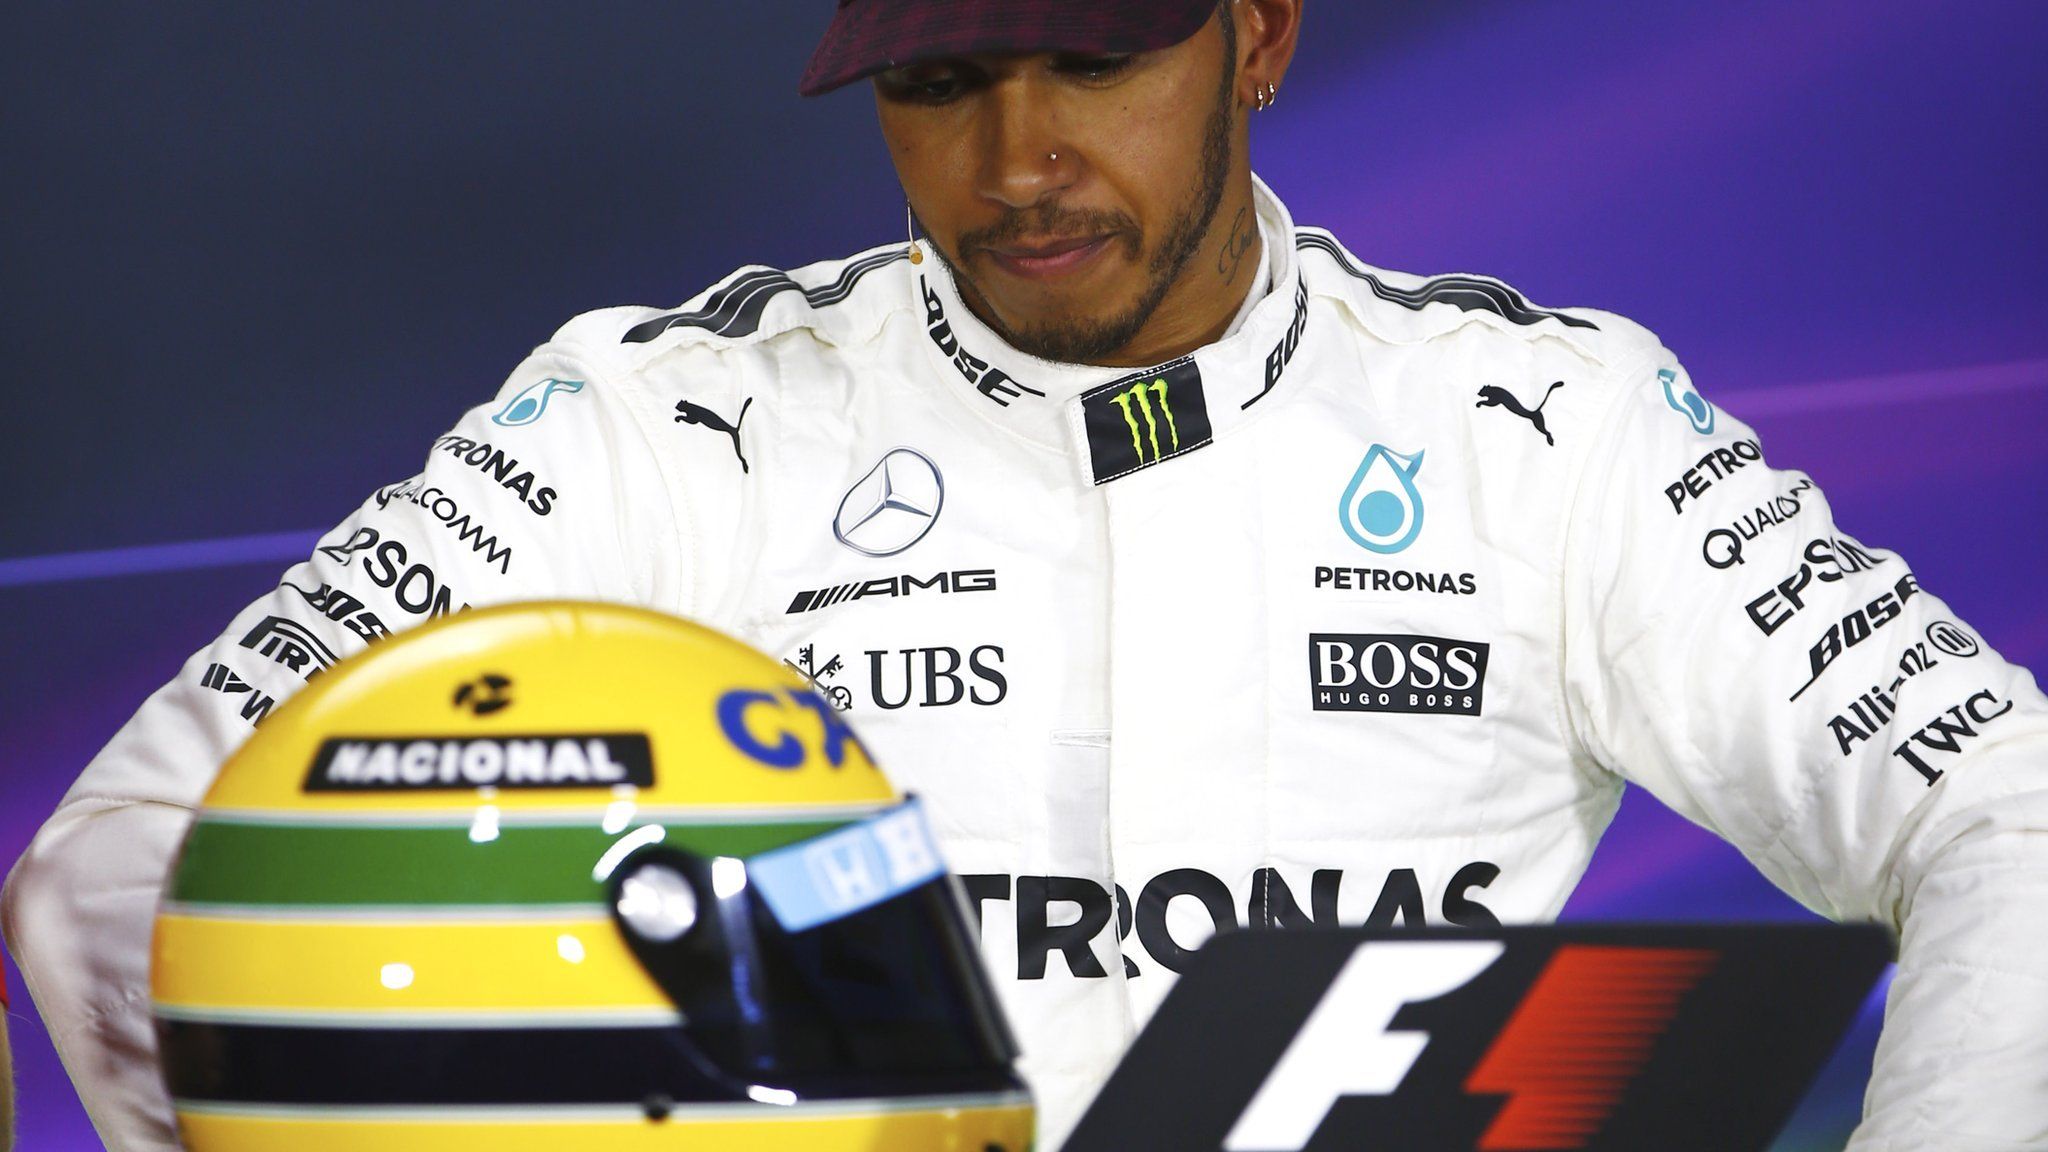 Lewis Hamilton admires Ayrton Senna's helmet